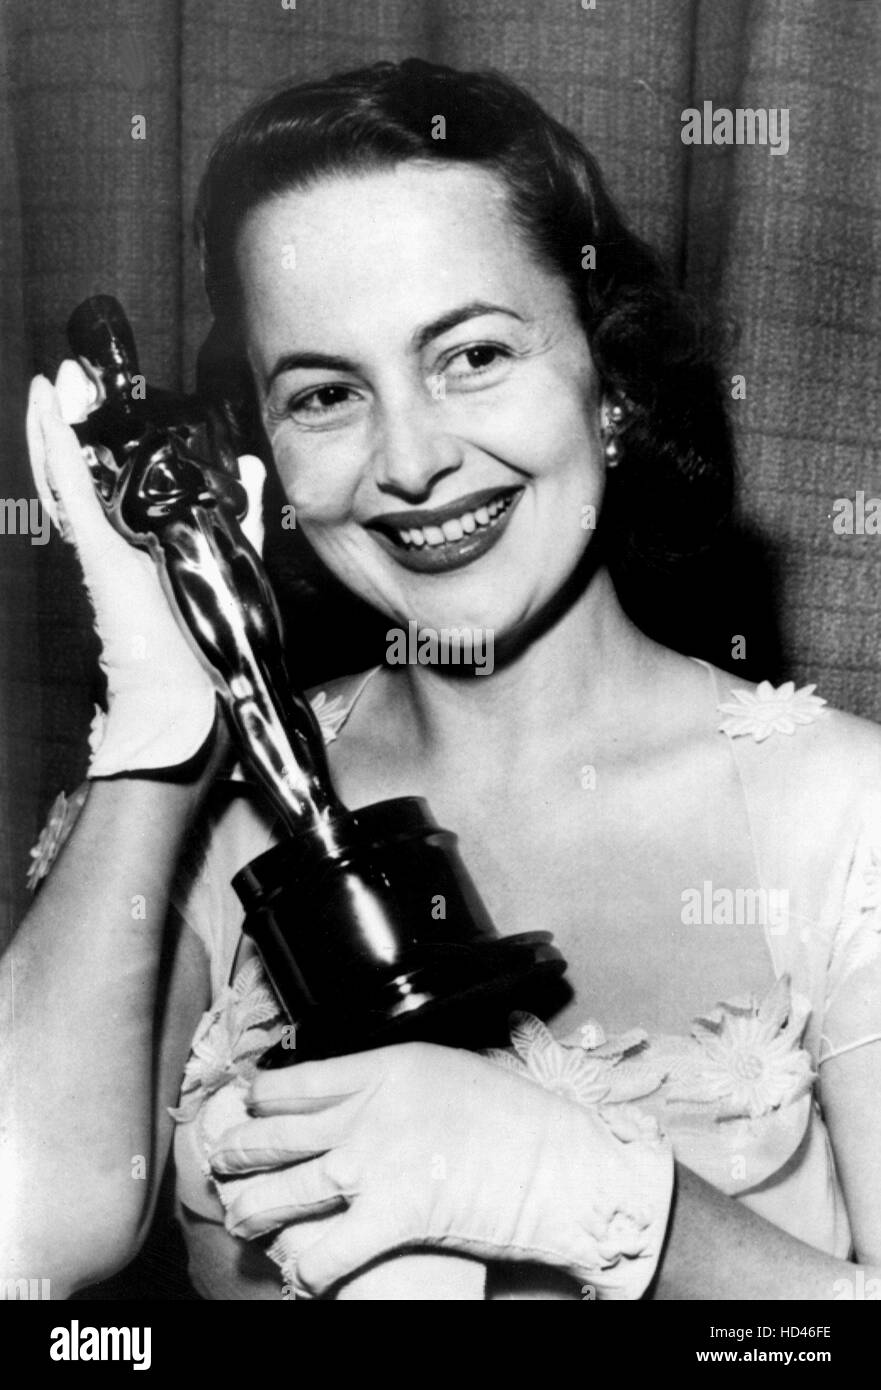 1949: OLIVIA DE HAVILLAND [Best Actress, THE HEIRESS] happily holds up ...